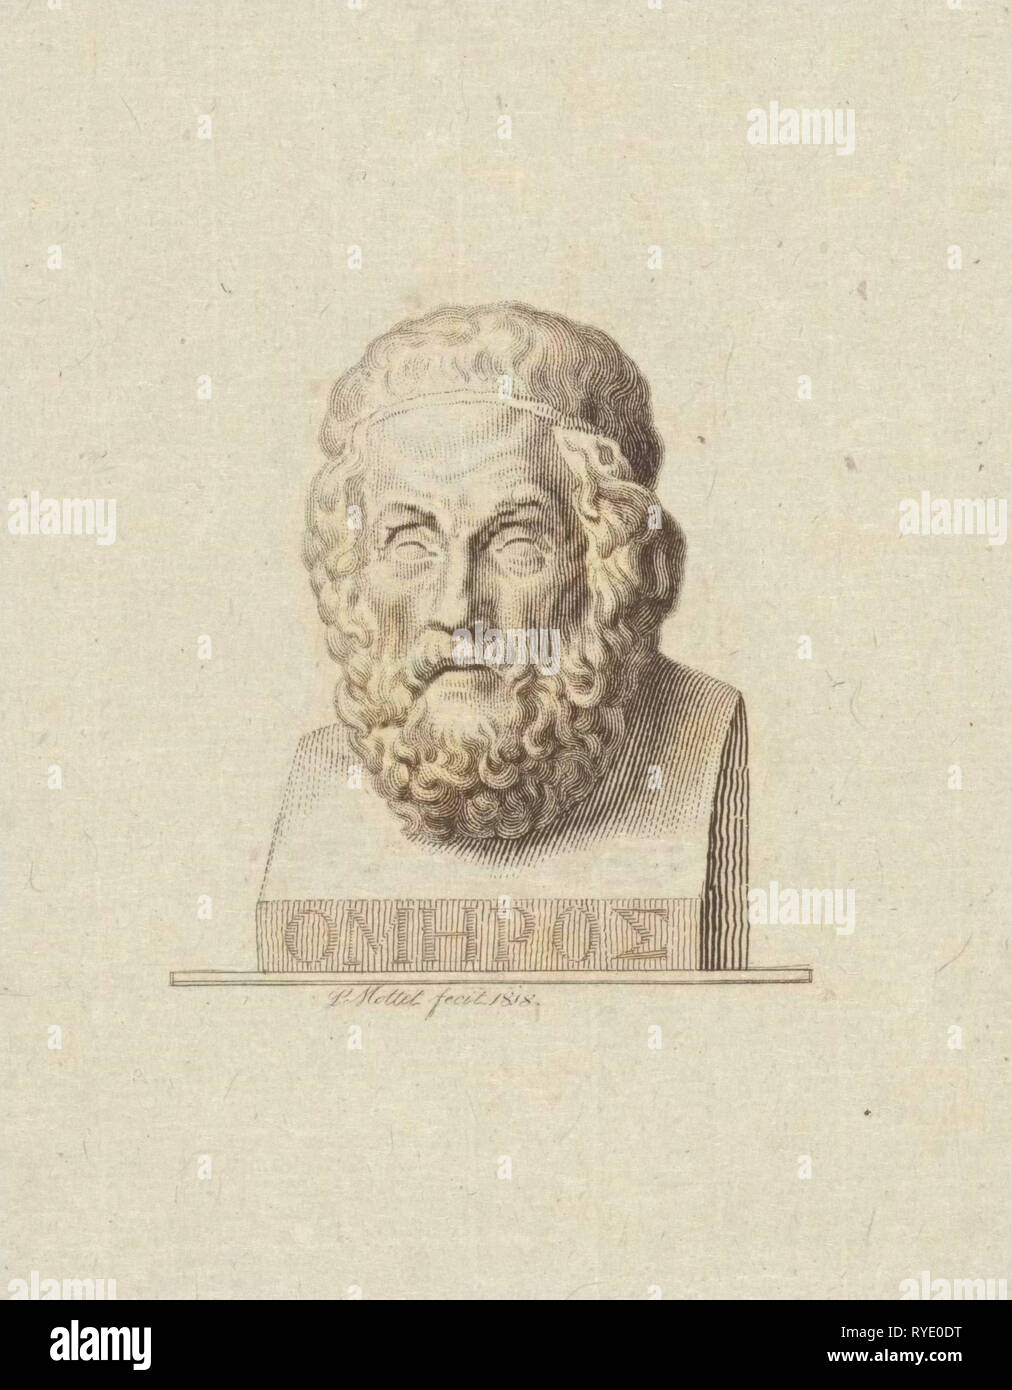 Busto del poeta greco Homer, P. Mottet, 1818 Foto Stock